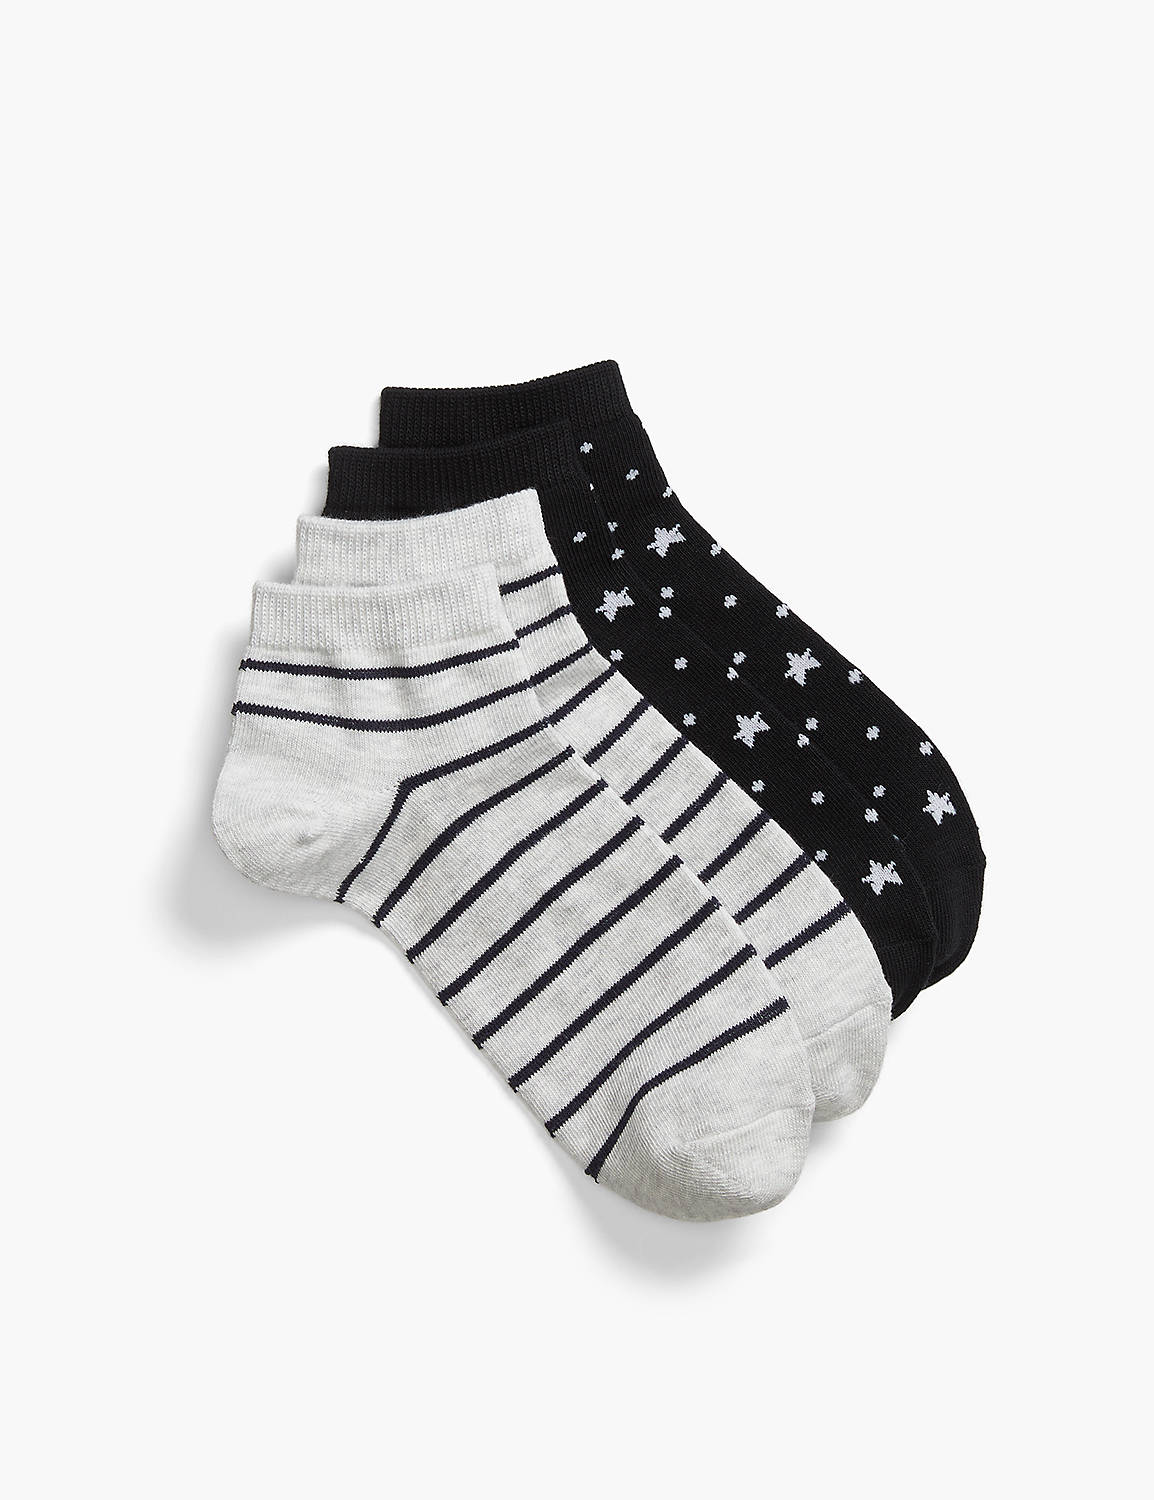 2-Pack Ankle Socks - Stars & Stripes Product Image 1